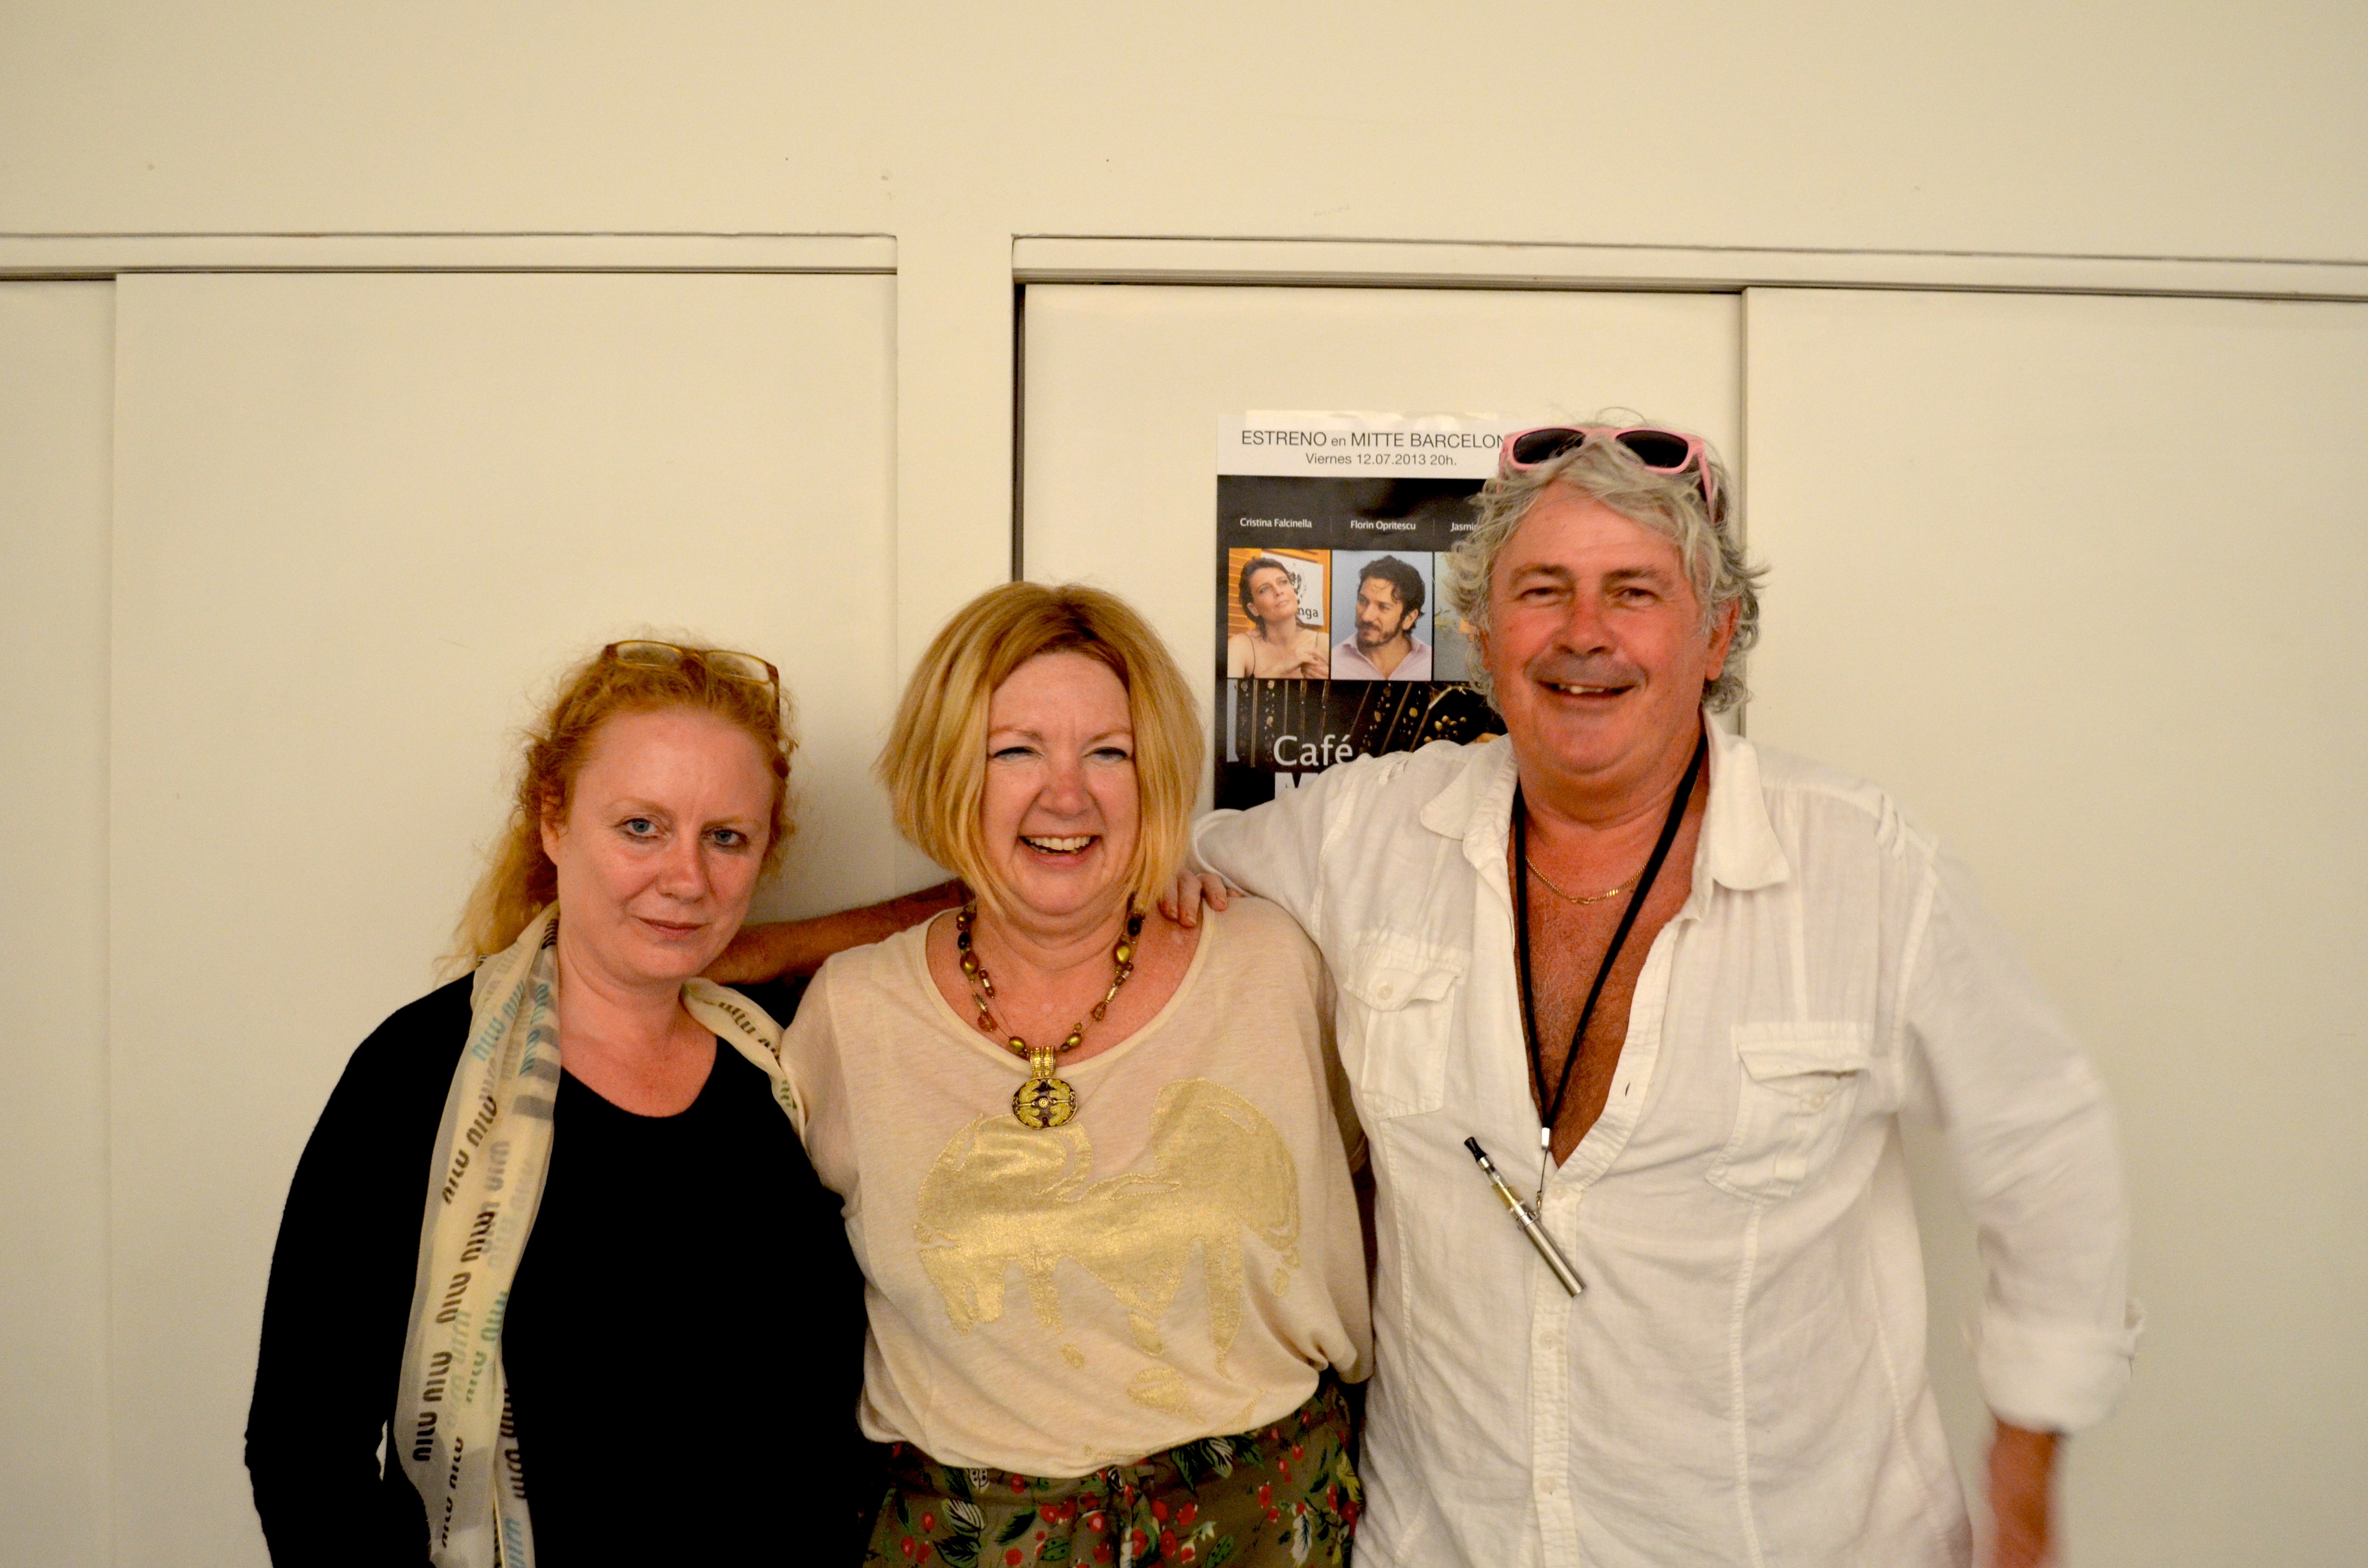 Café Milonga premiere. The director Jo Ann Arpin with Luci Lenox and Steve Daly, international casting directors.